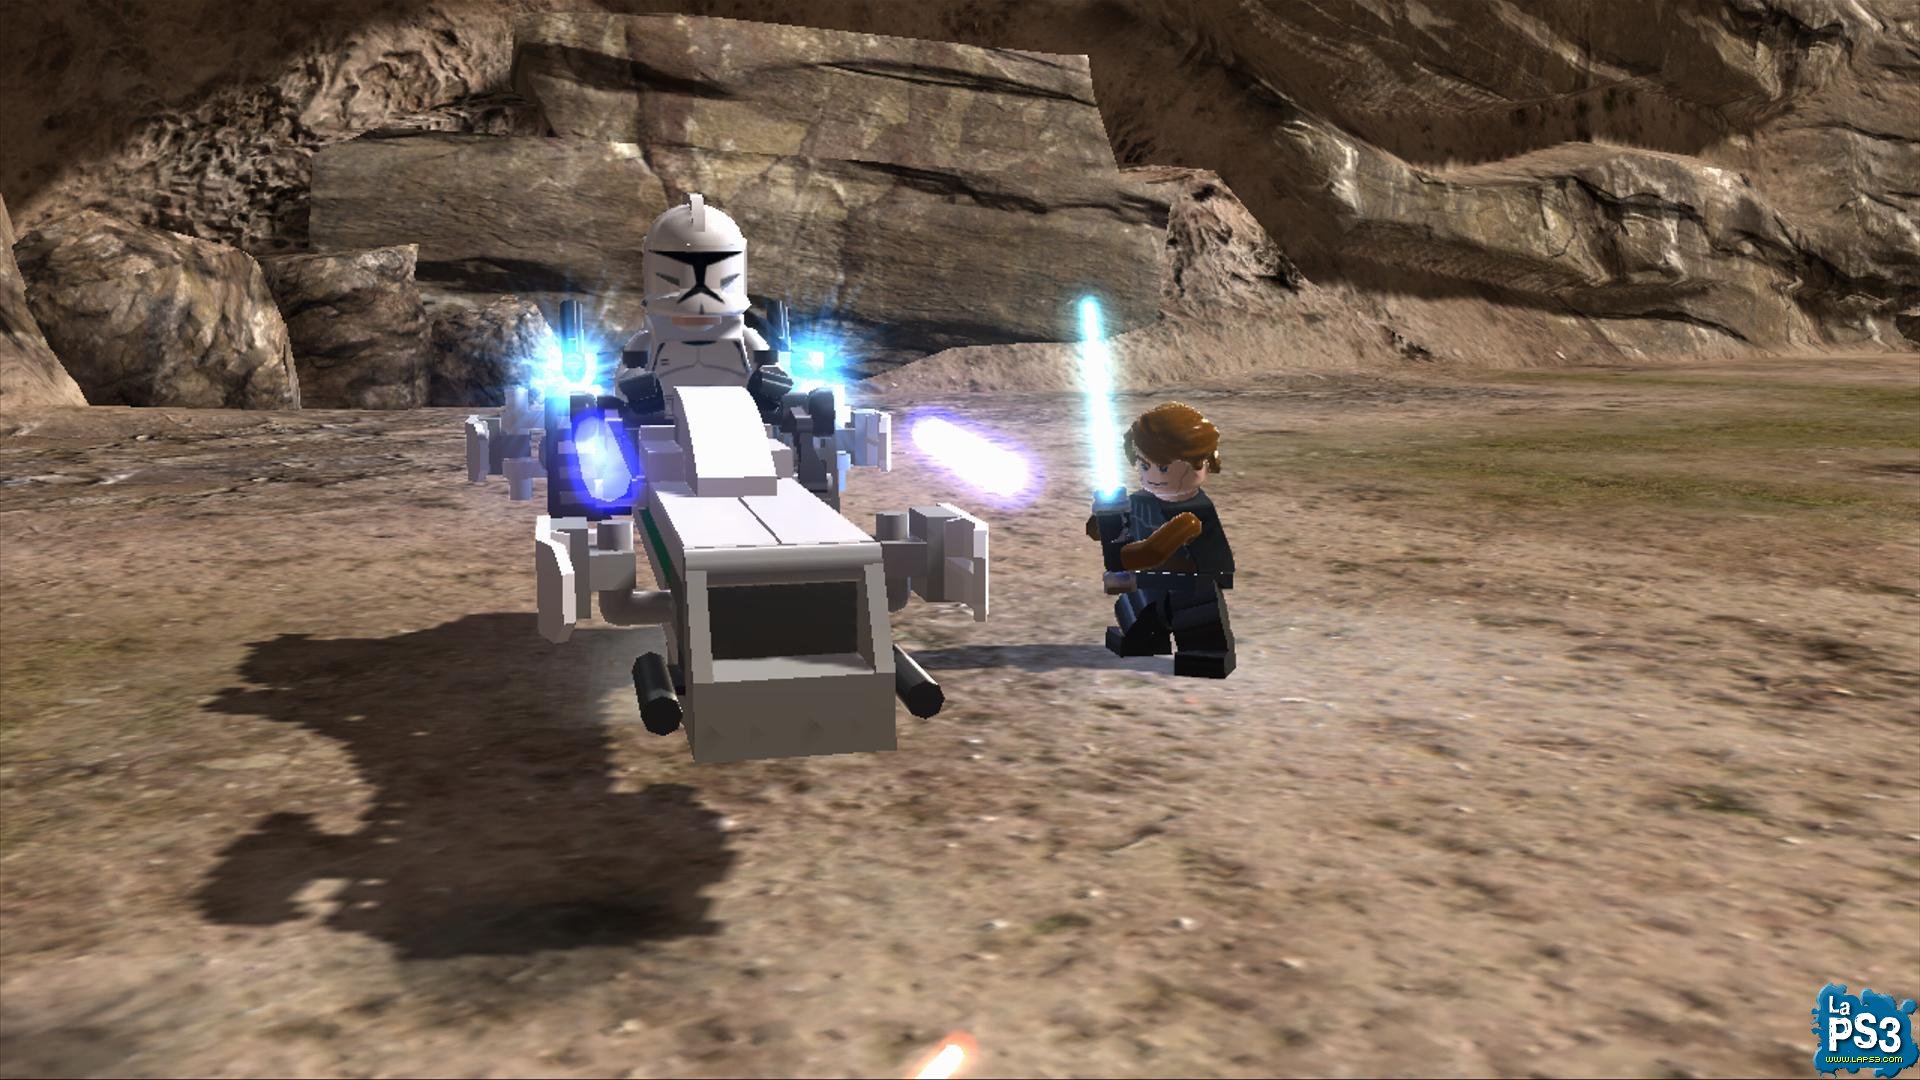 Lego Star Wars 3 The Clone Wars  setup free download